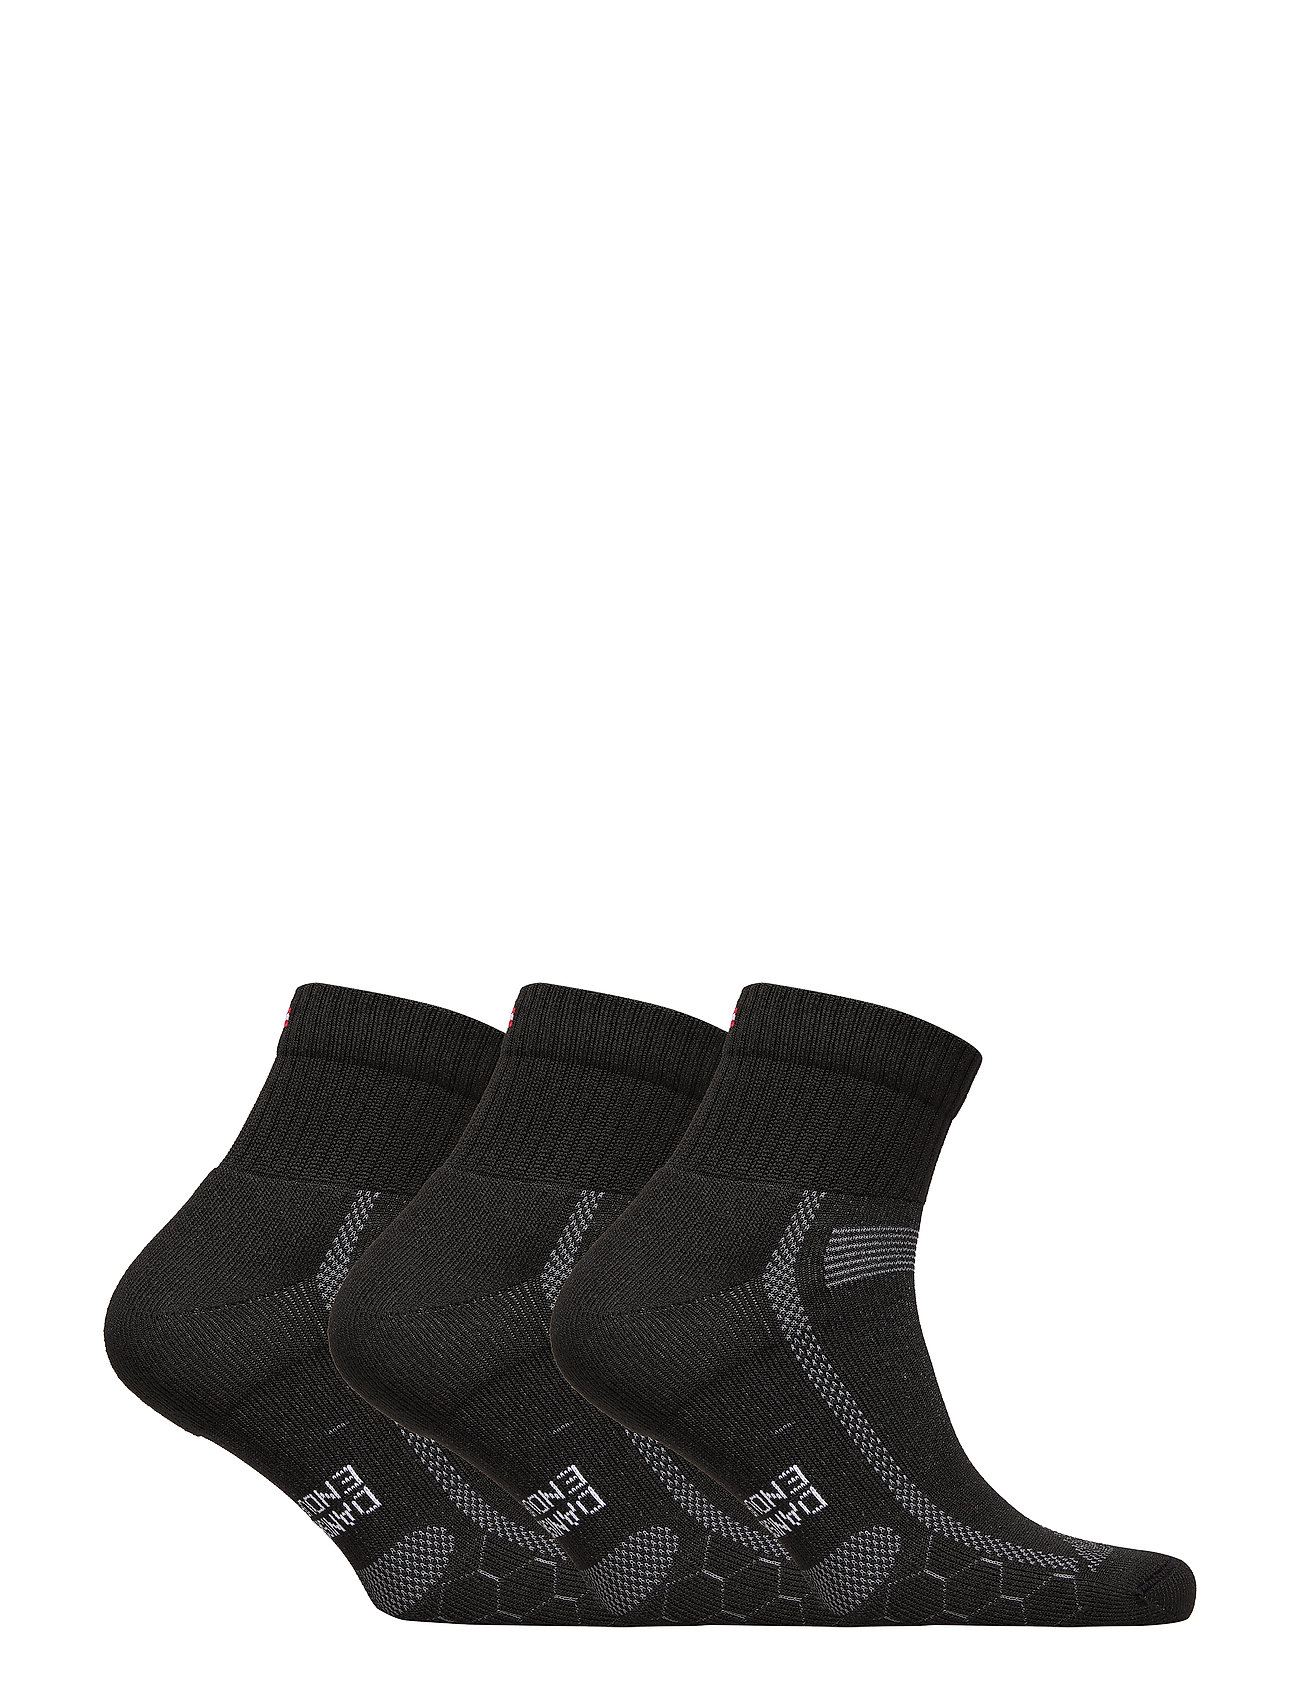 Danish Endurance - Long Distance Running Socks 3-pack - lowest prices - black/grey - 1